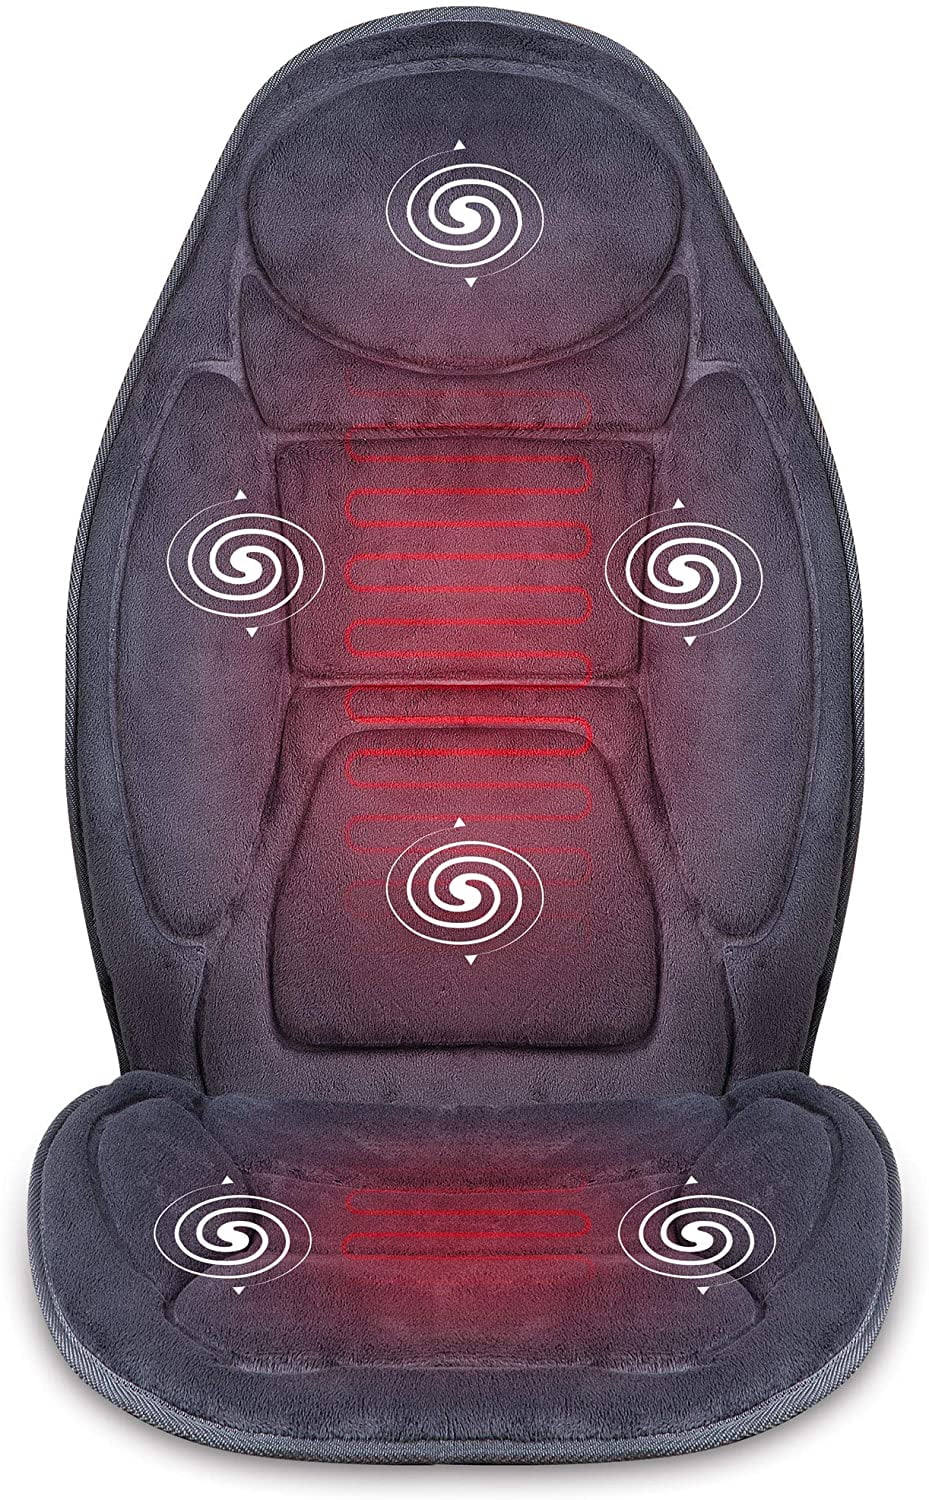 Snailax Vibration Massage Seat Cushion With Heat 6 Vibrating Motors And 3 Therapy Heating Pad